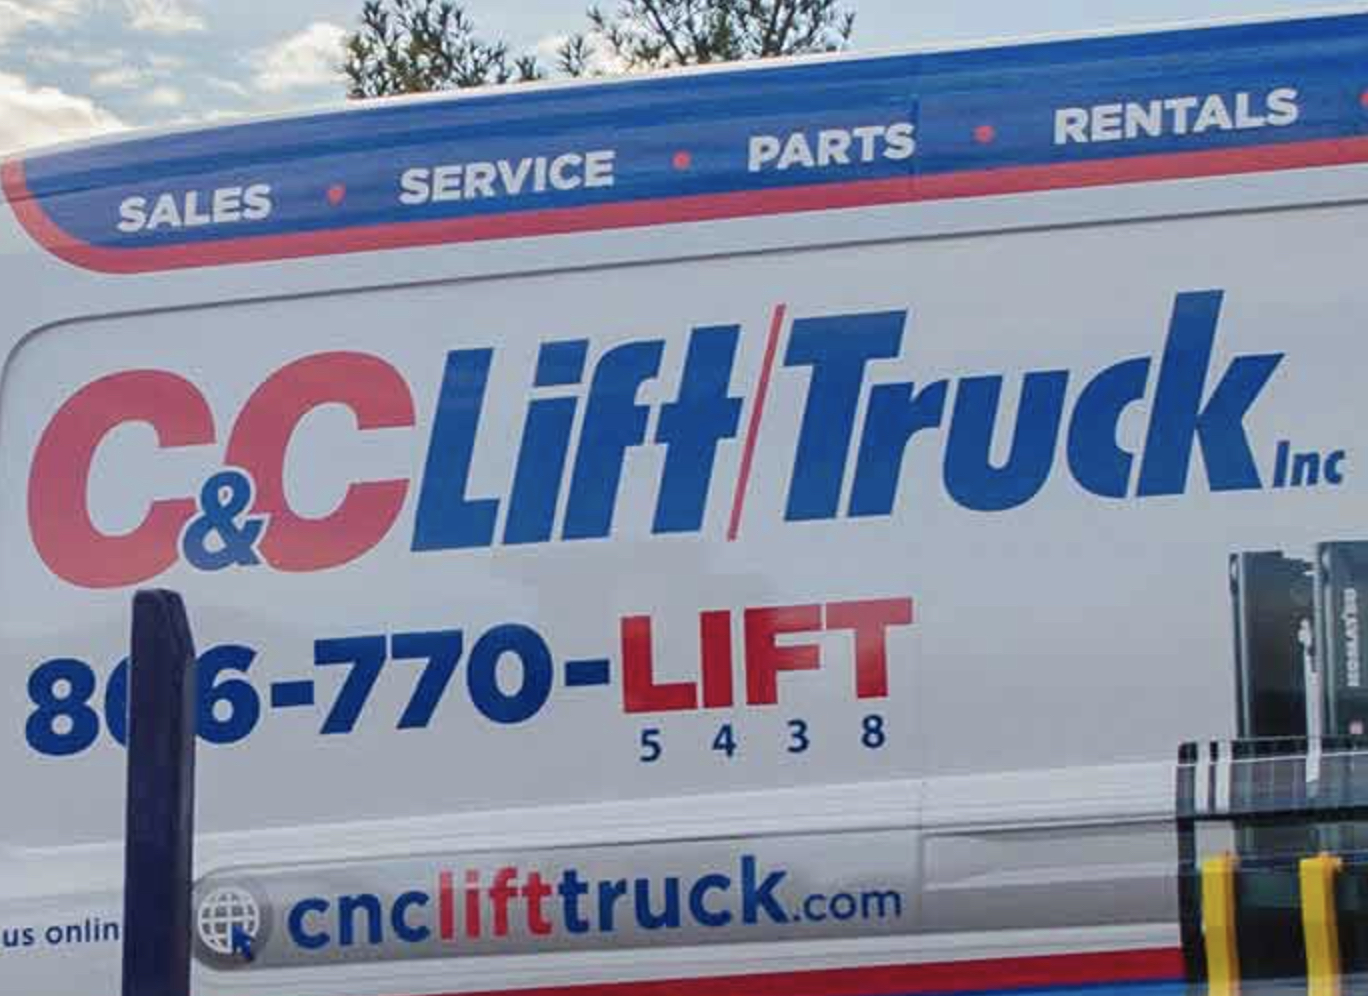 C & C Lift Truck